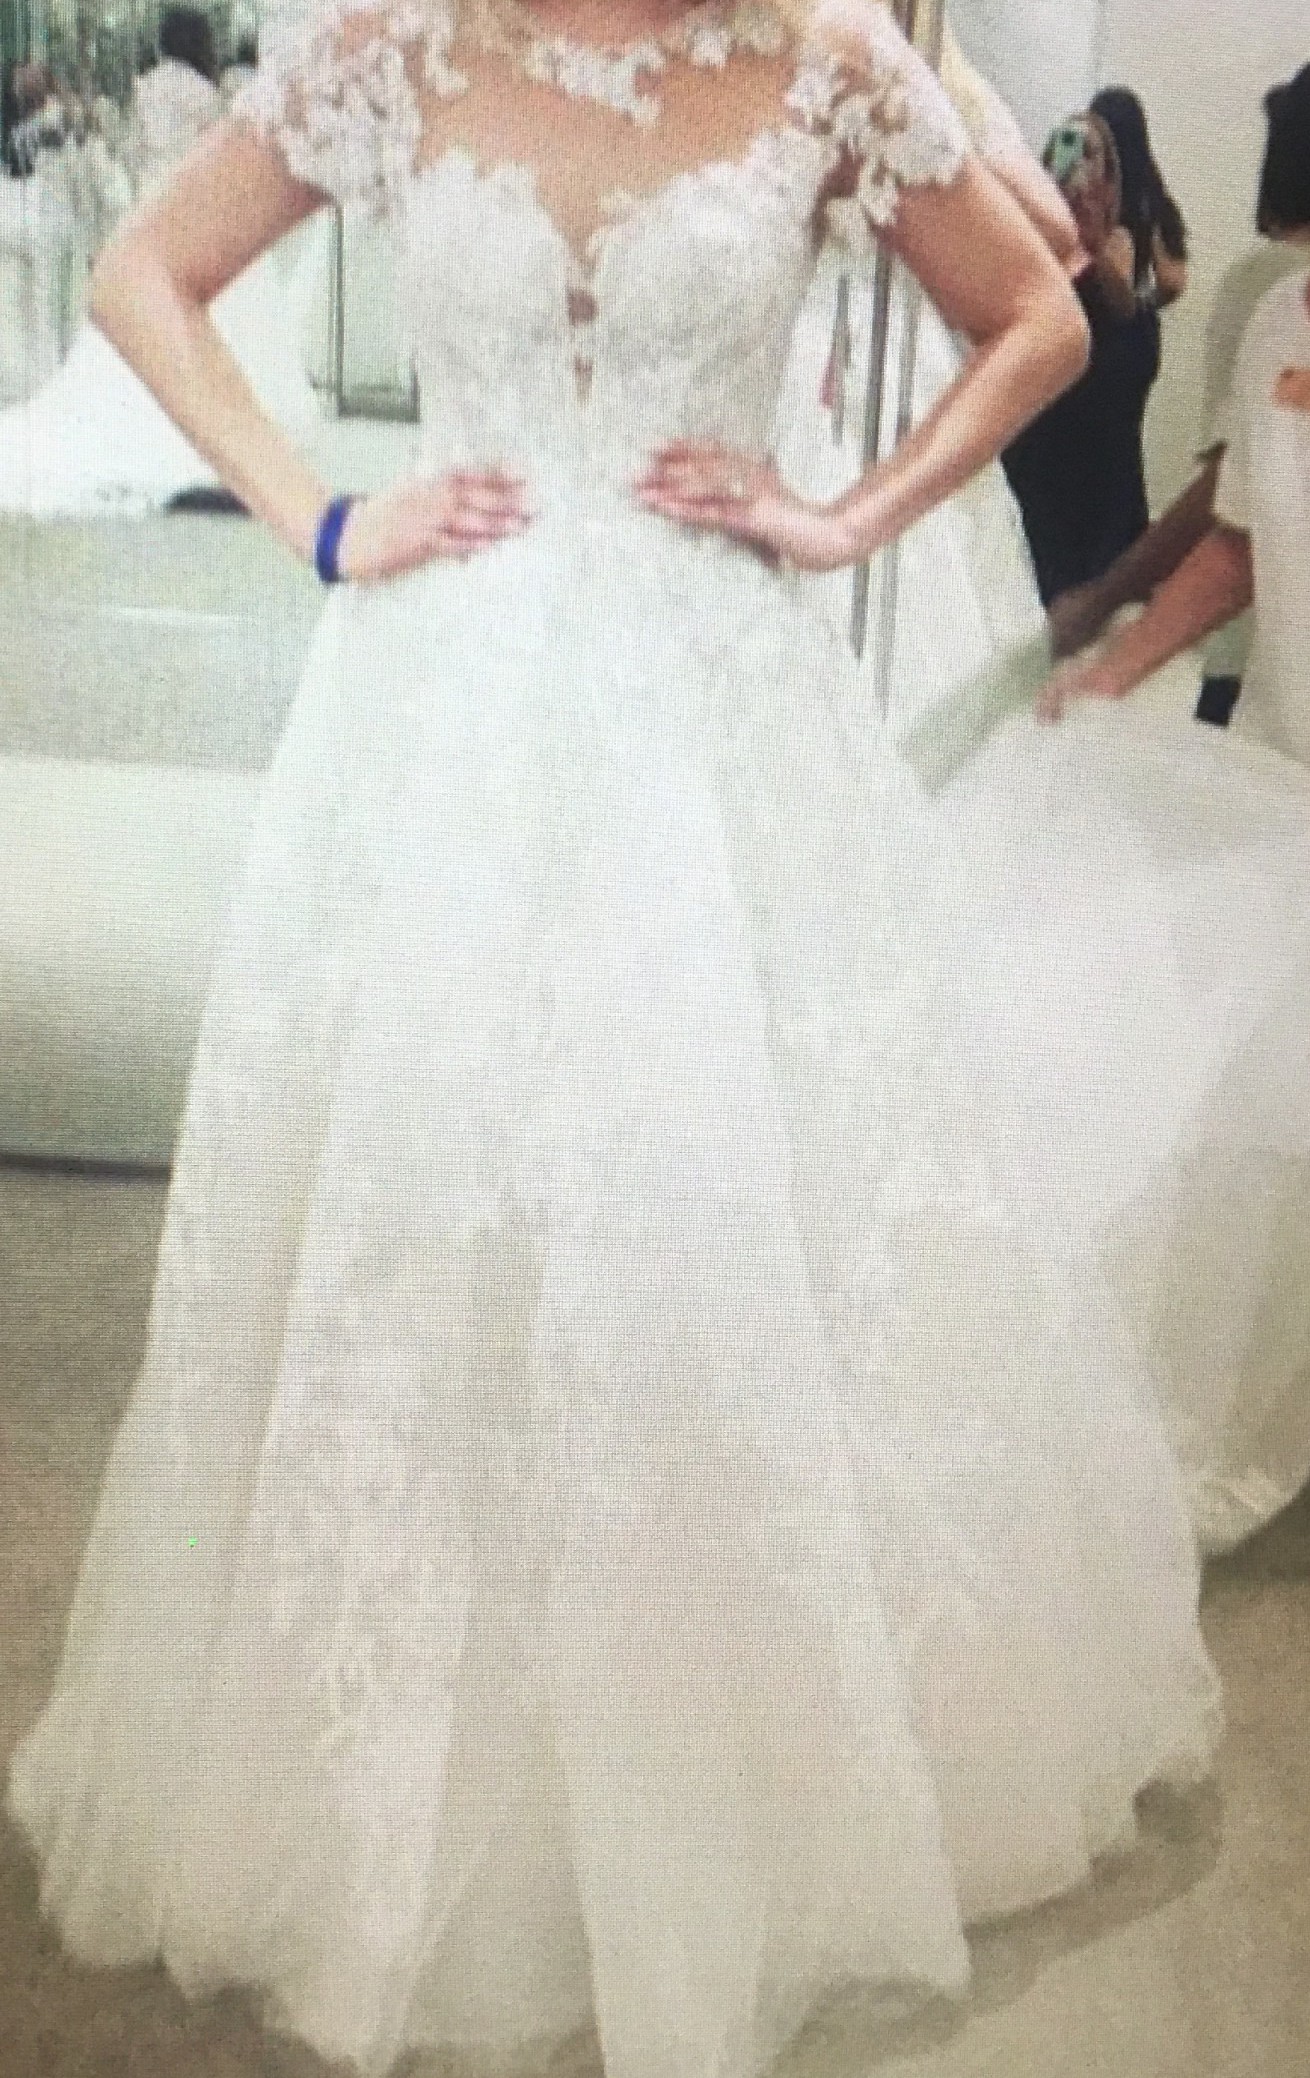 oleg cassini illusion long sleeve wedding dress